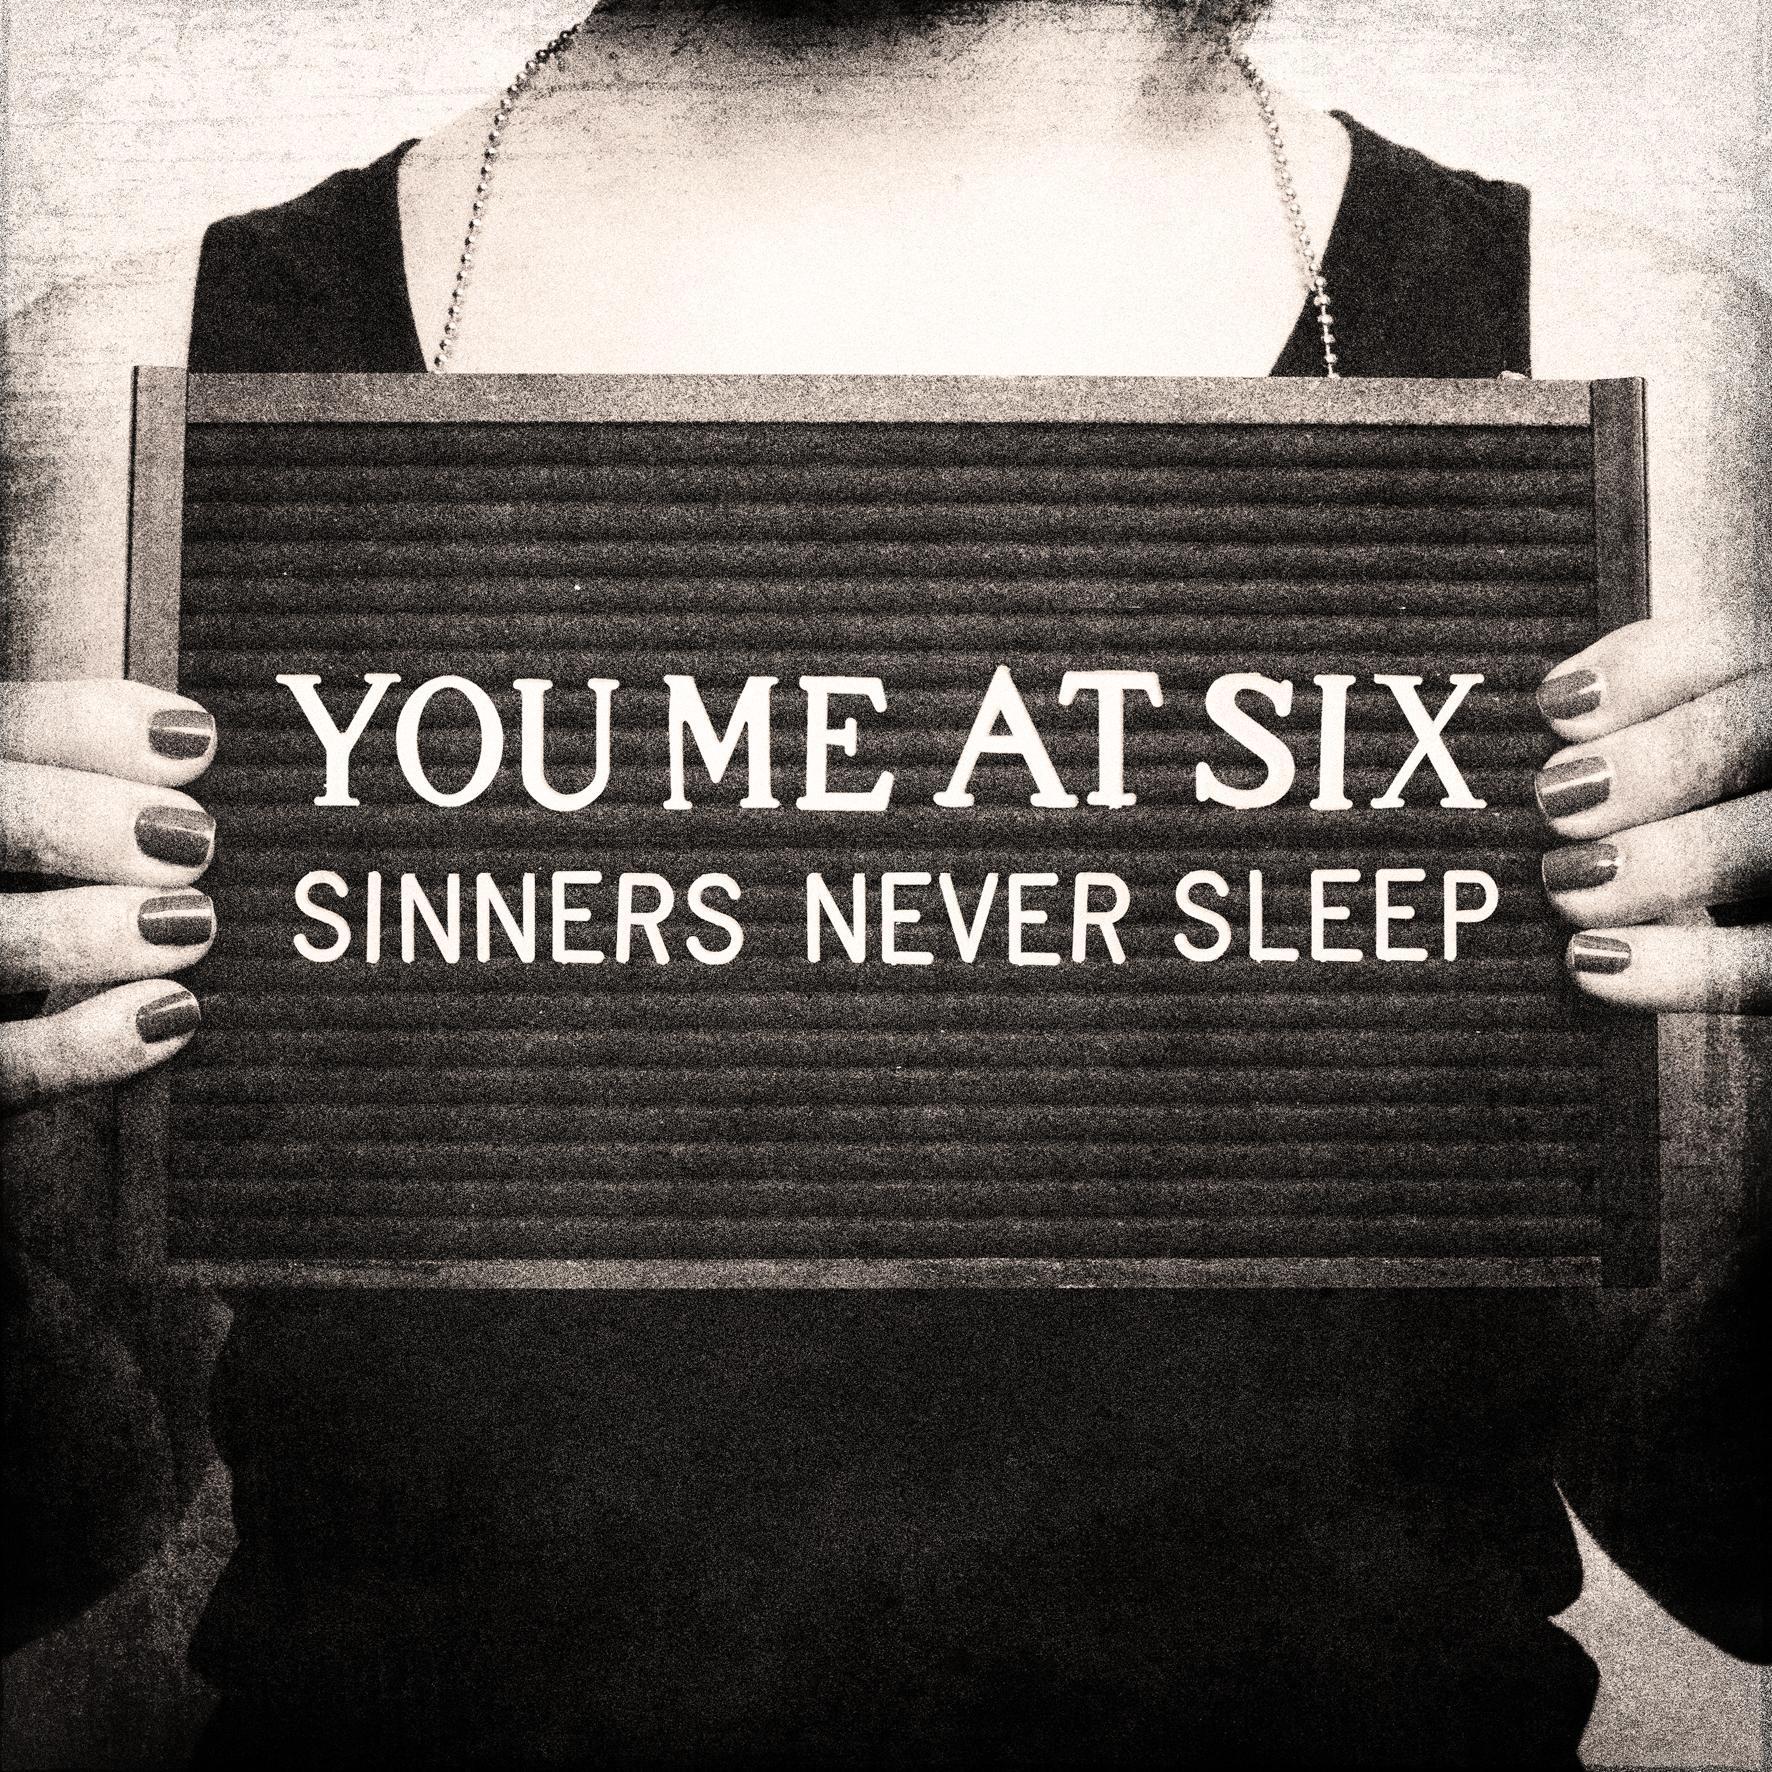 You Me At Six tâtonne encore dans Sinners never sleep.